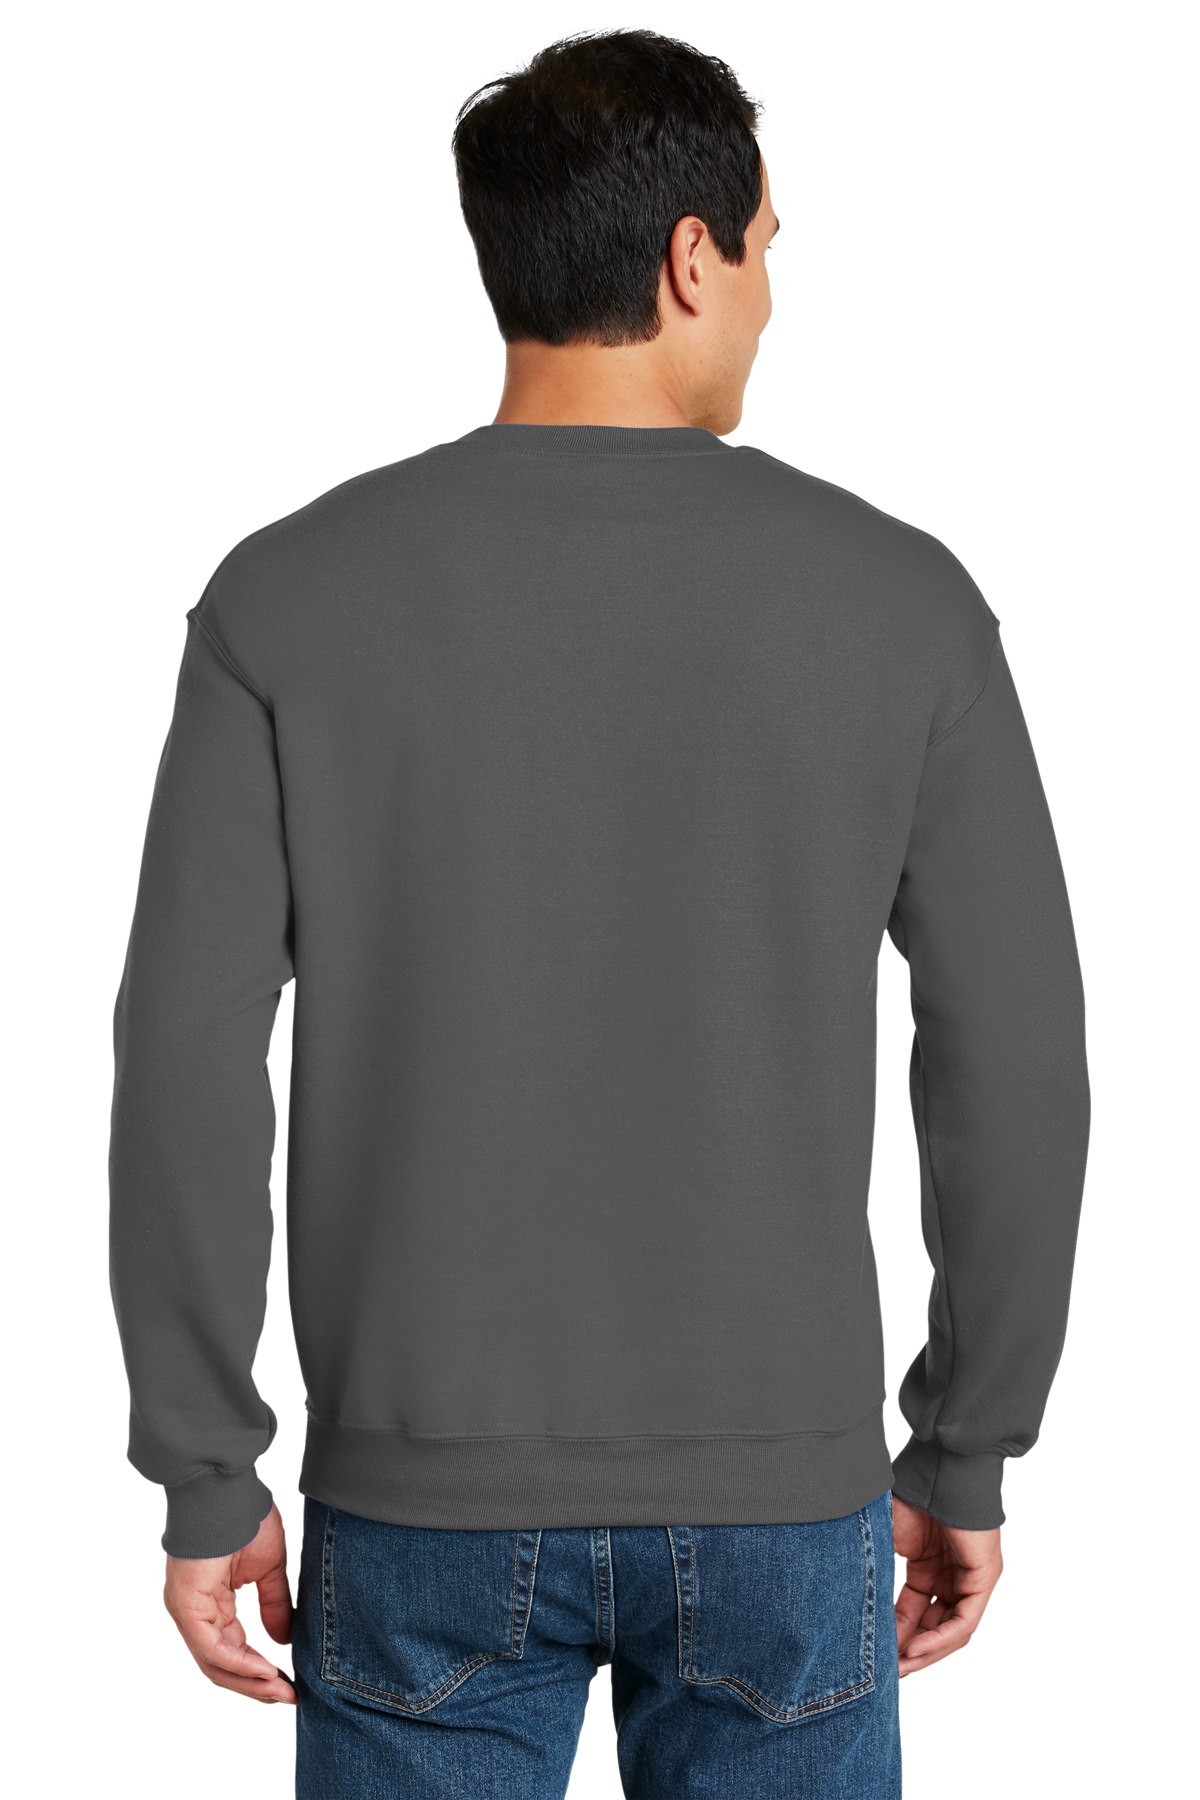 Gildan - DryBlend Crewneck Sweatshirt, Product